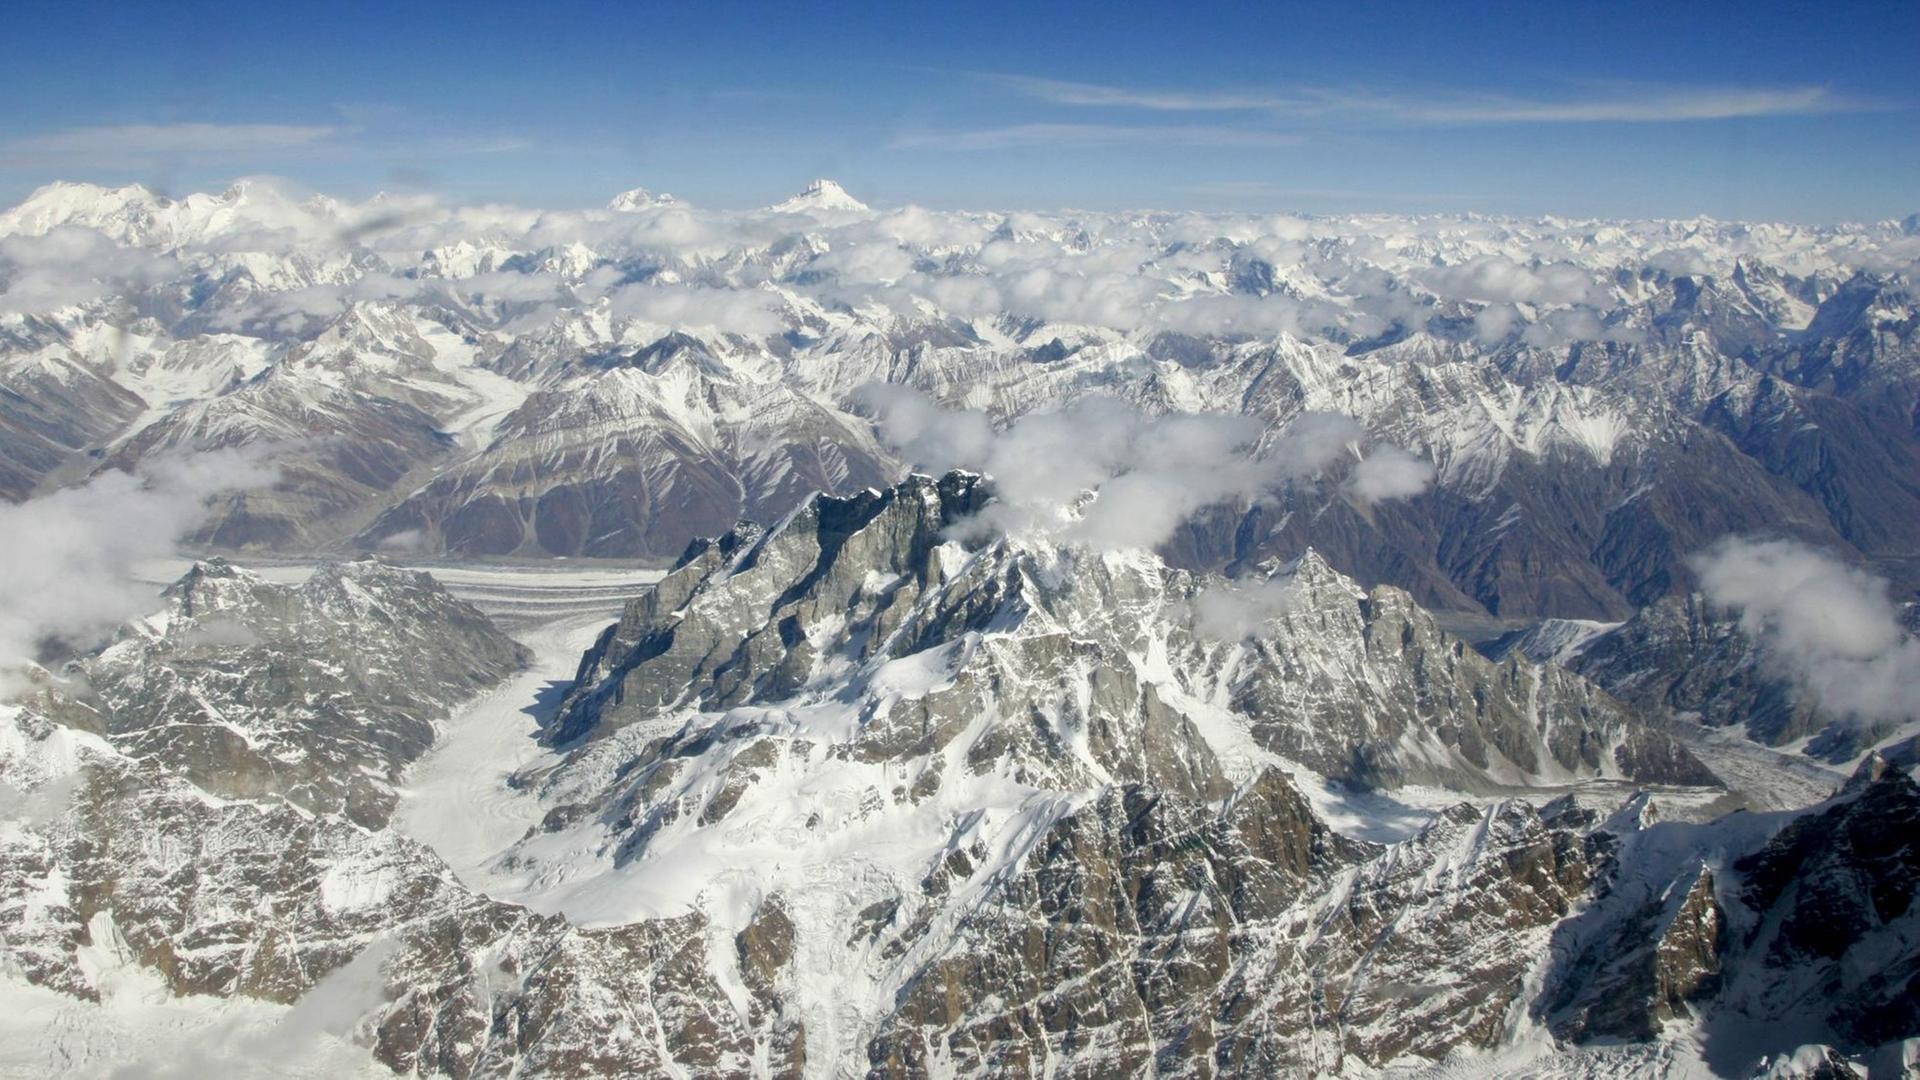 Karokoram mountains with K2 aerial view from an airplane, North Pakistan PUBLICATIONxINxGERxSUIxAUTxONLY Copyright: TimxGraham 1161-7952 Mountains With K2 Aerial View from to Airplane North Pakistan PUBLICATIONxINxGERxSUIxAUTxONLY Copyright TimxGraham 1161